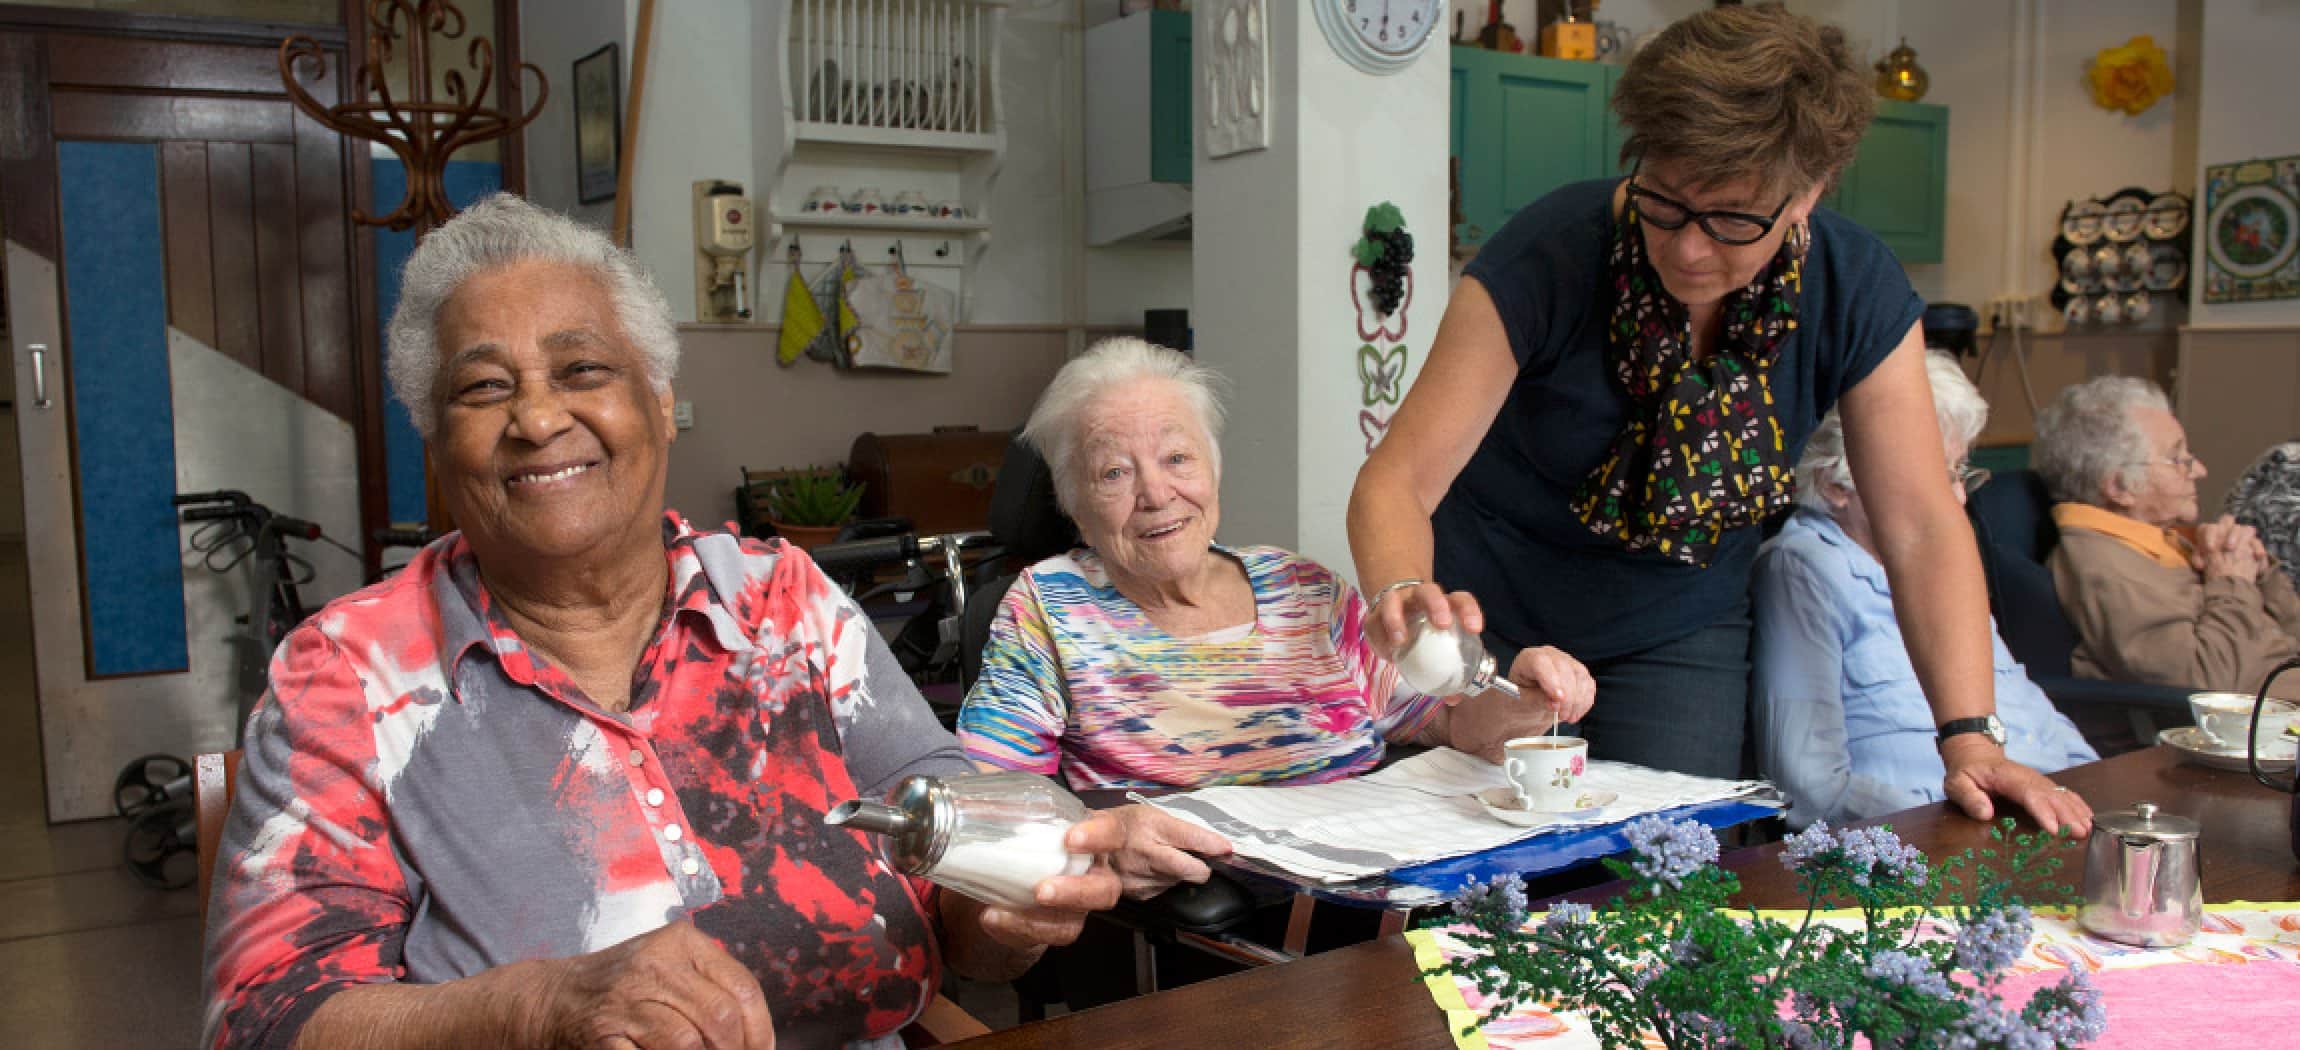 Lieve oude vrouwen aan gezellige tafel met koffie en knutselwerk